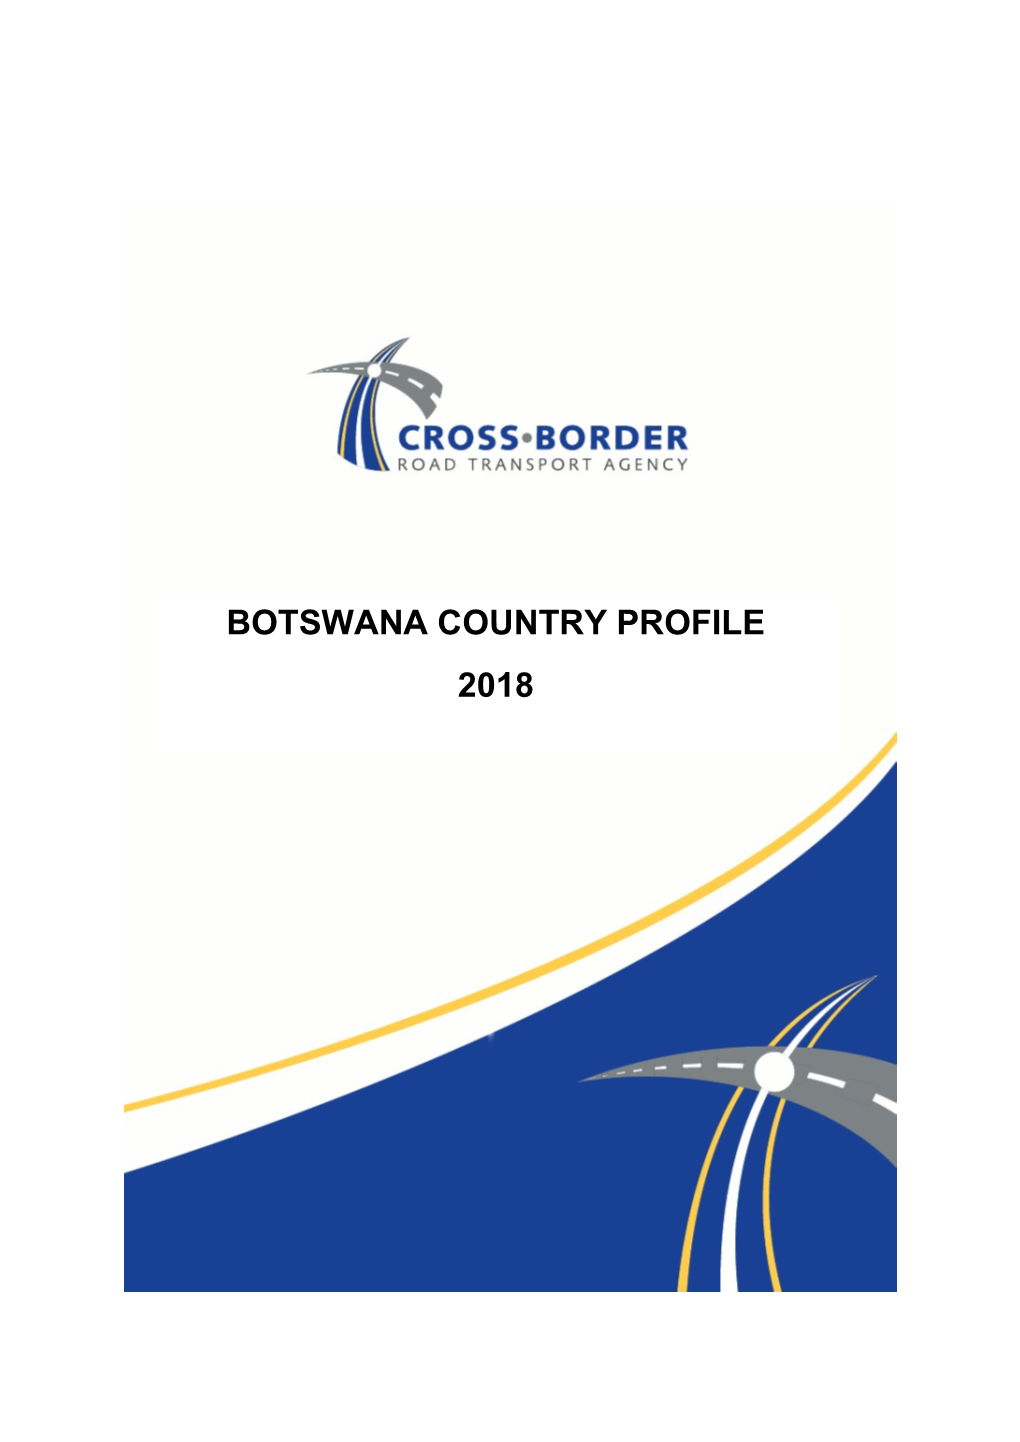 Botswana Country Profile 2018